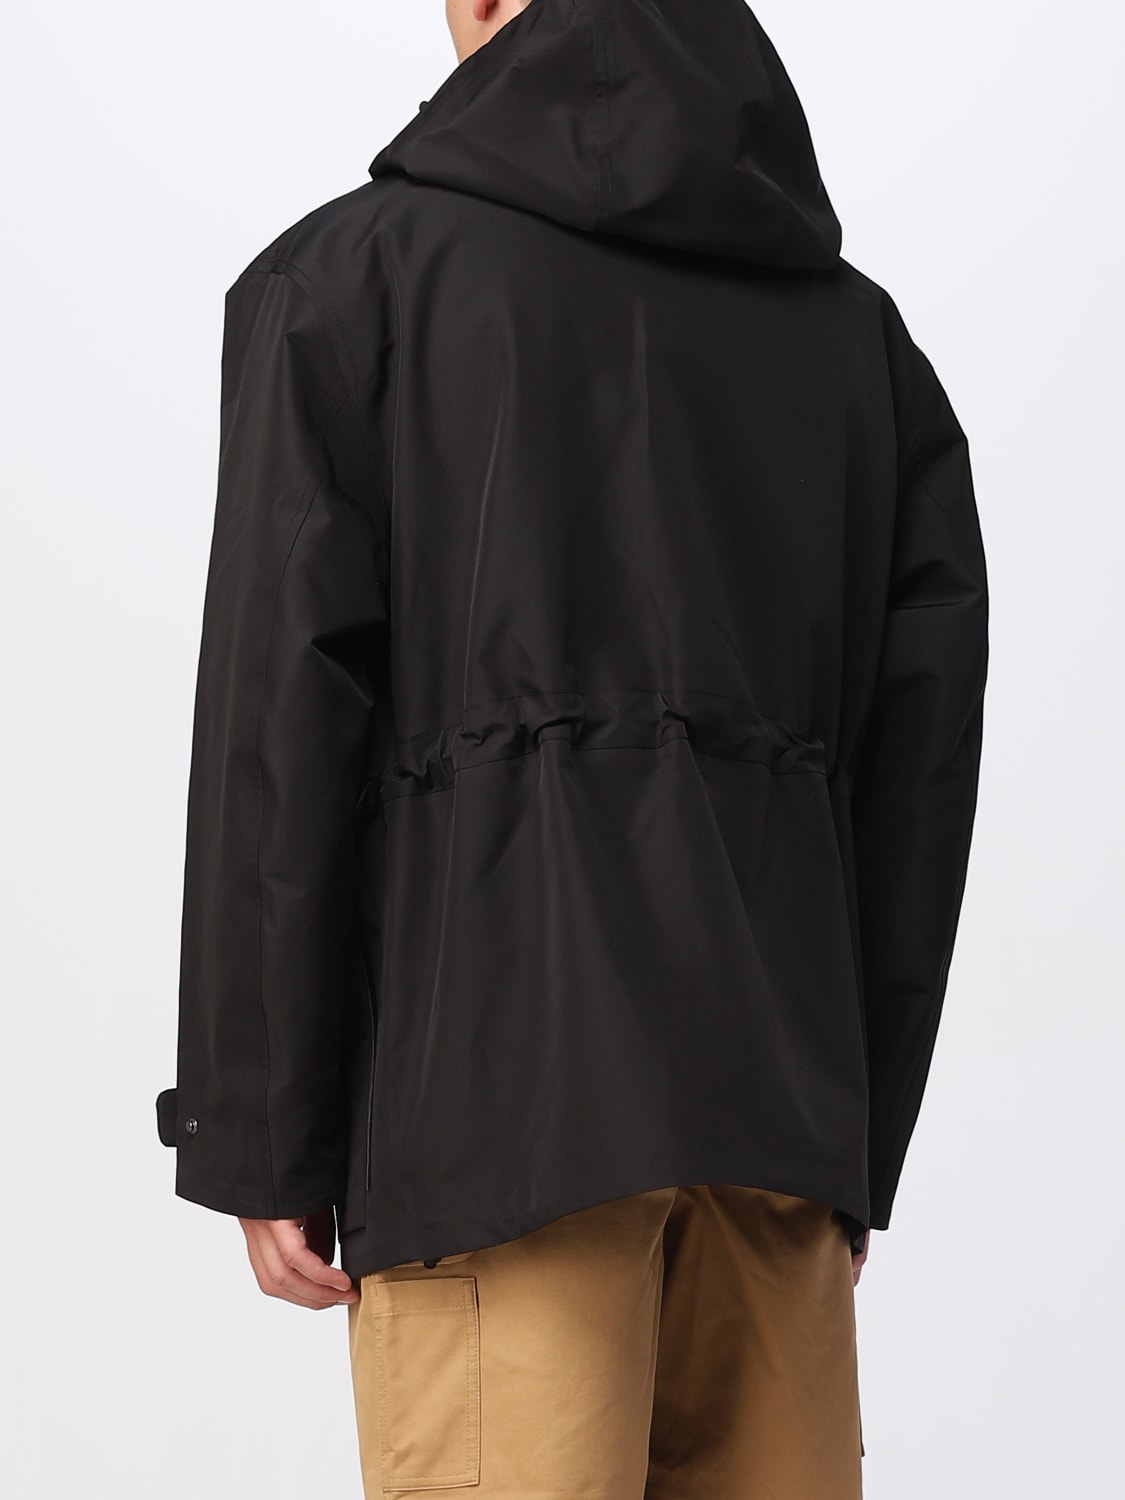 BURBERRY: jacket for man - Black | Burberry jacket 8070396 online on ...